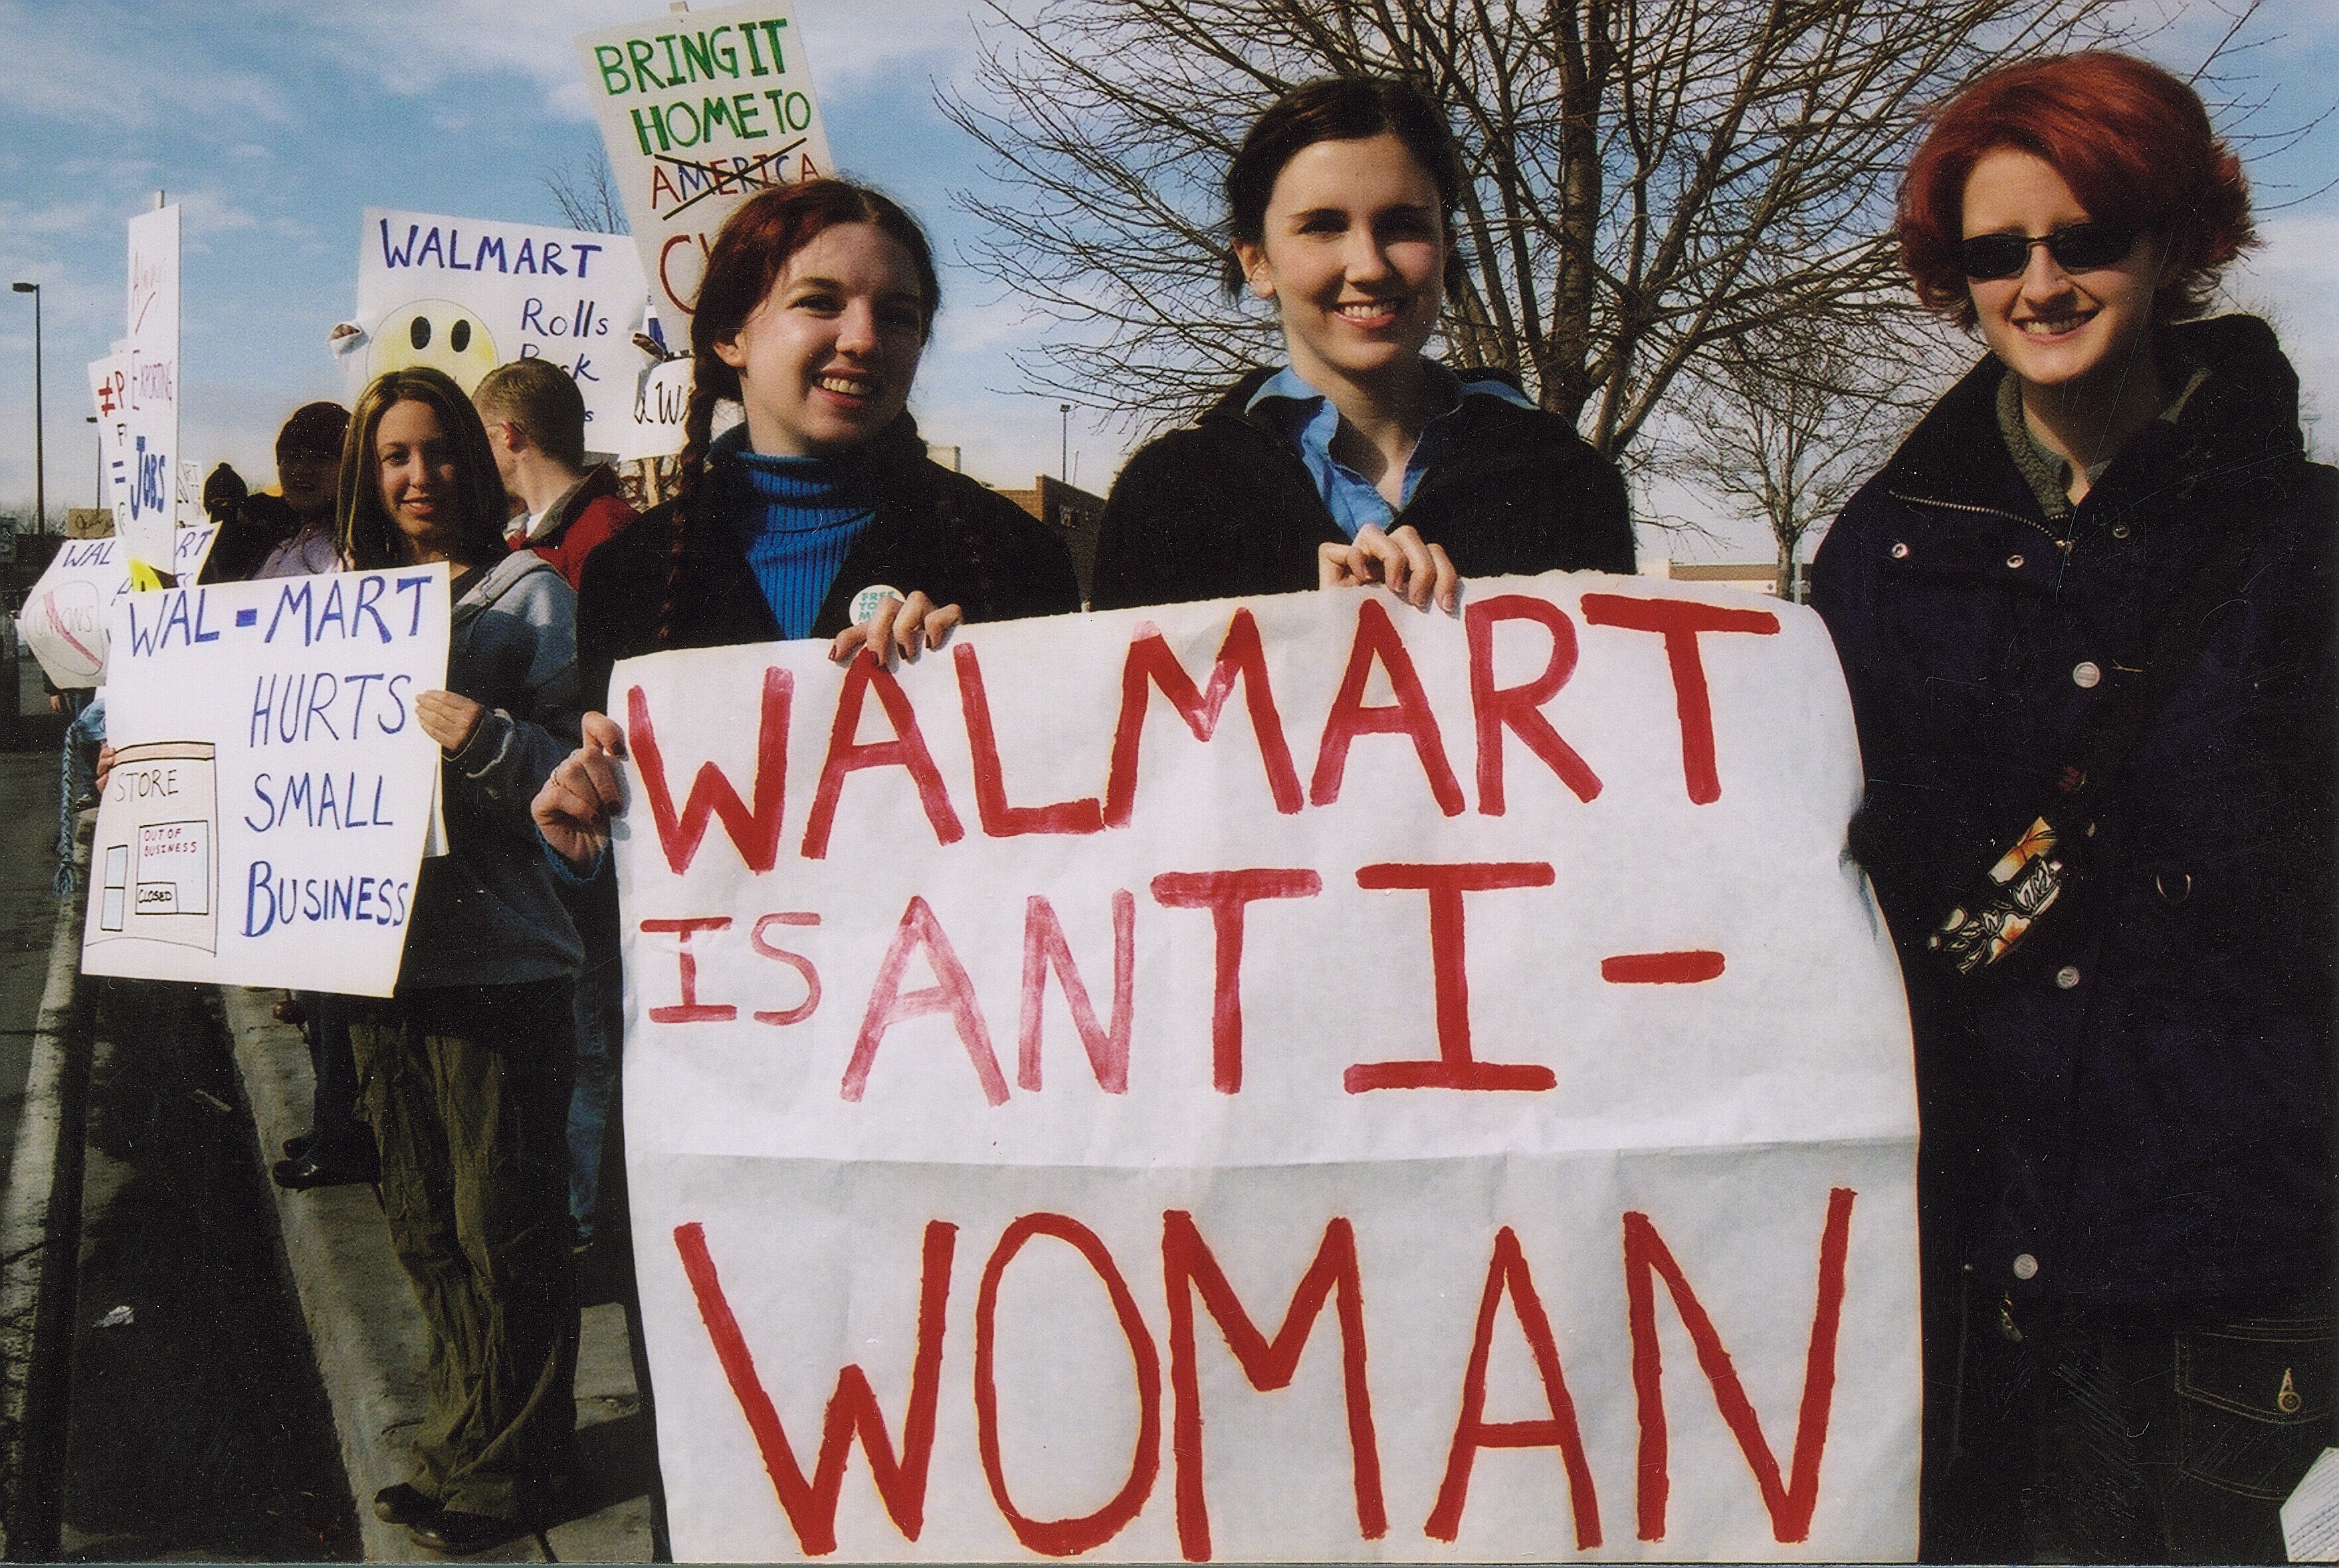 http://upload.wikimedia.org/wikipedia/commons/8/83/Wal-Mart_protest_in_Utah.jpg